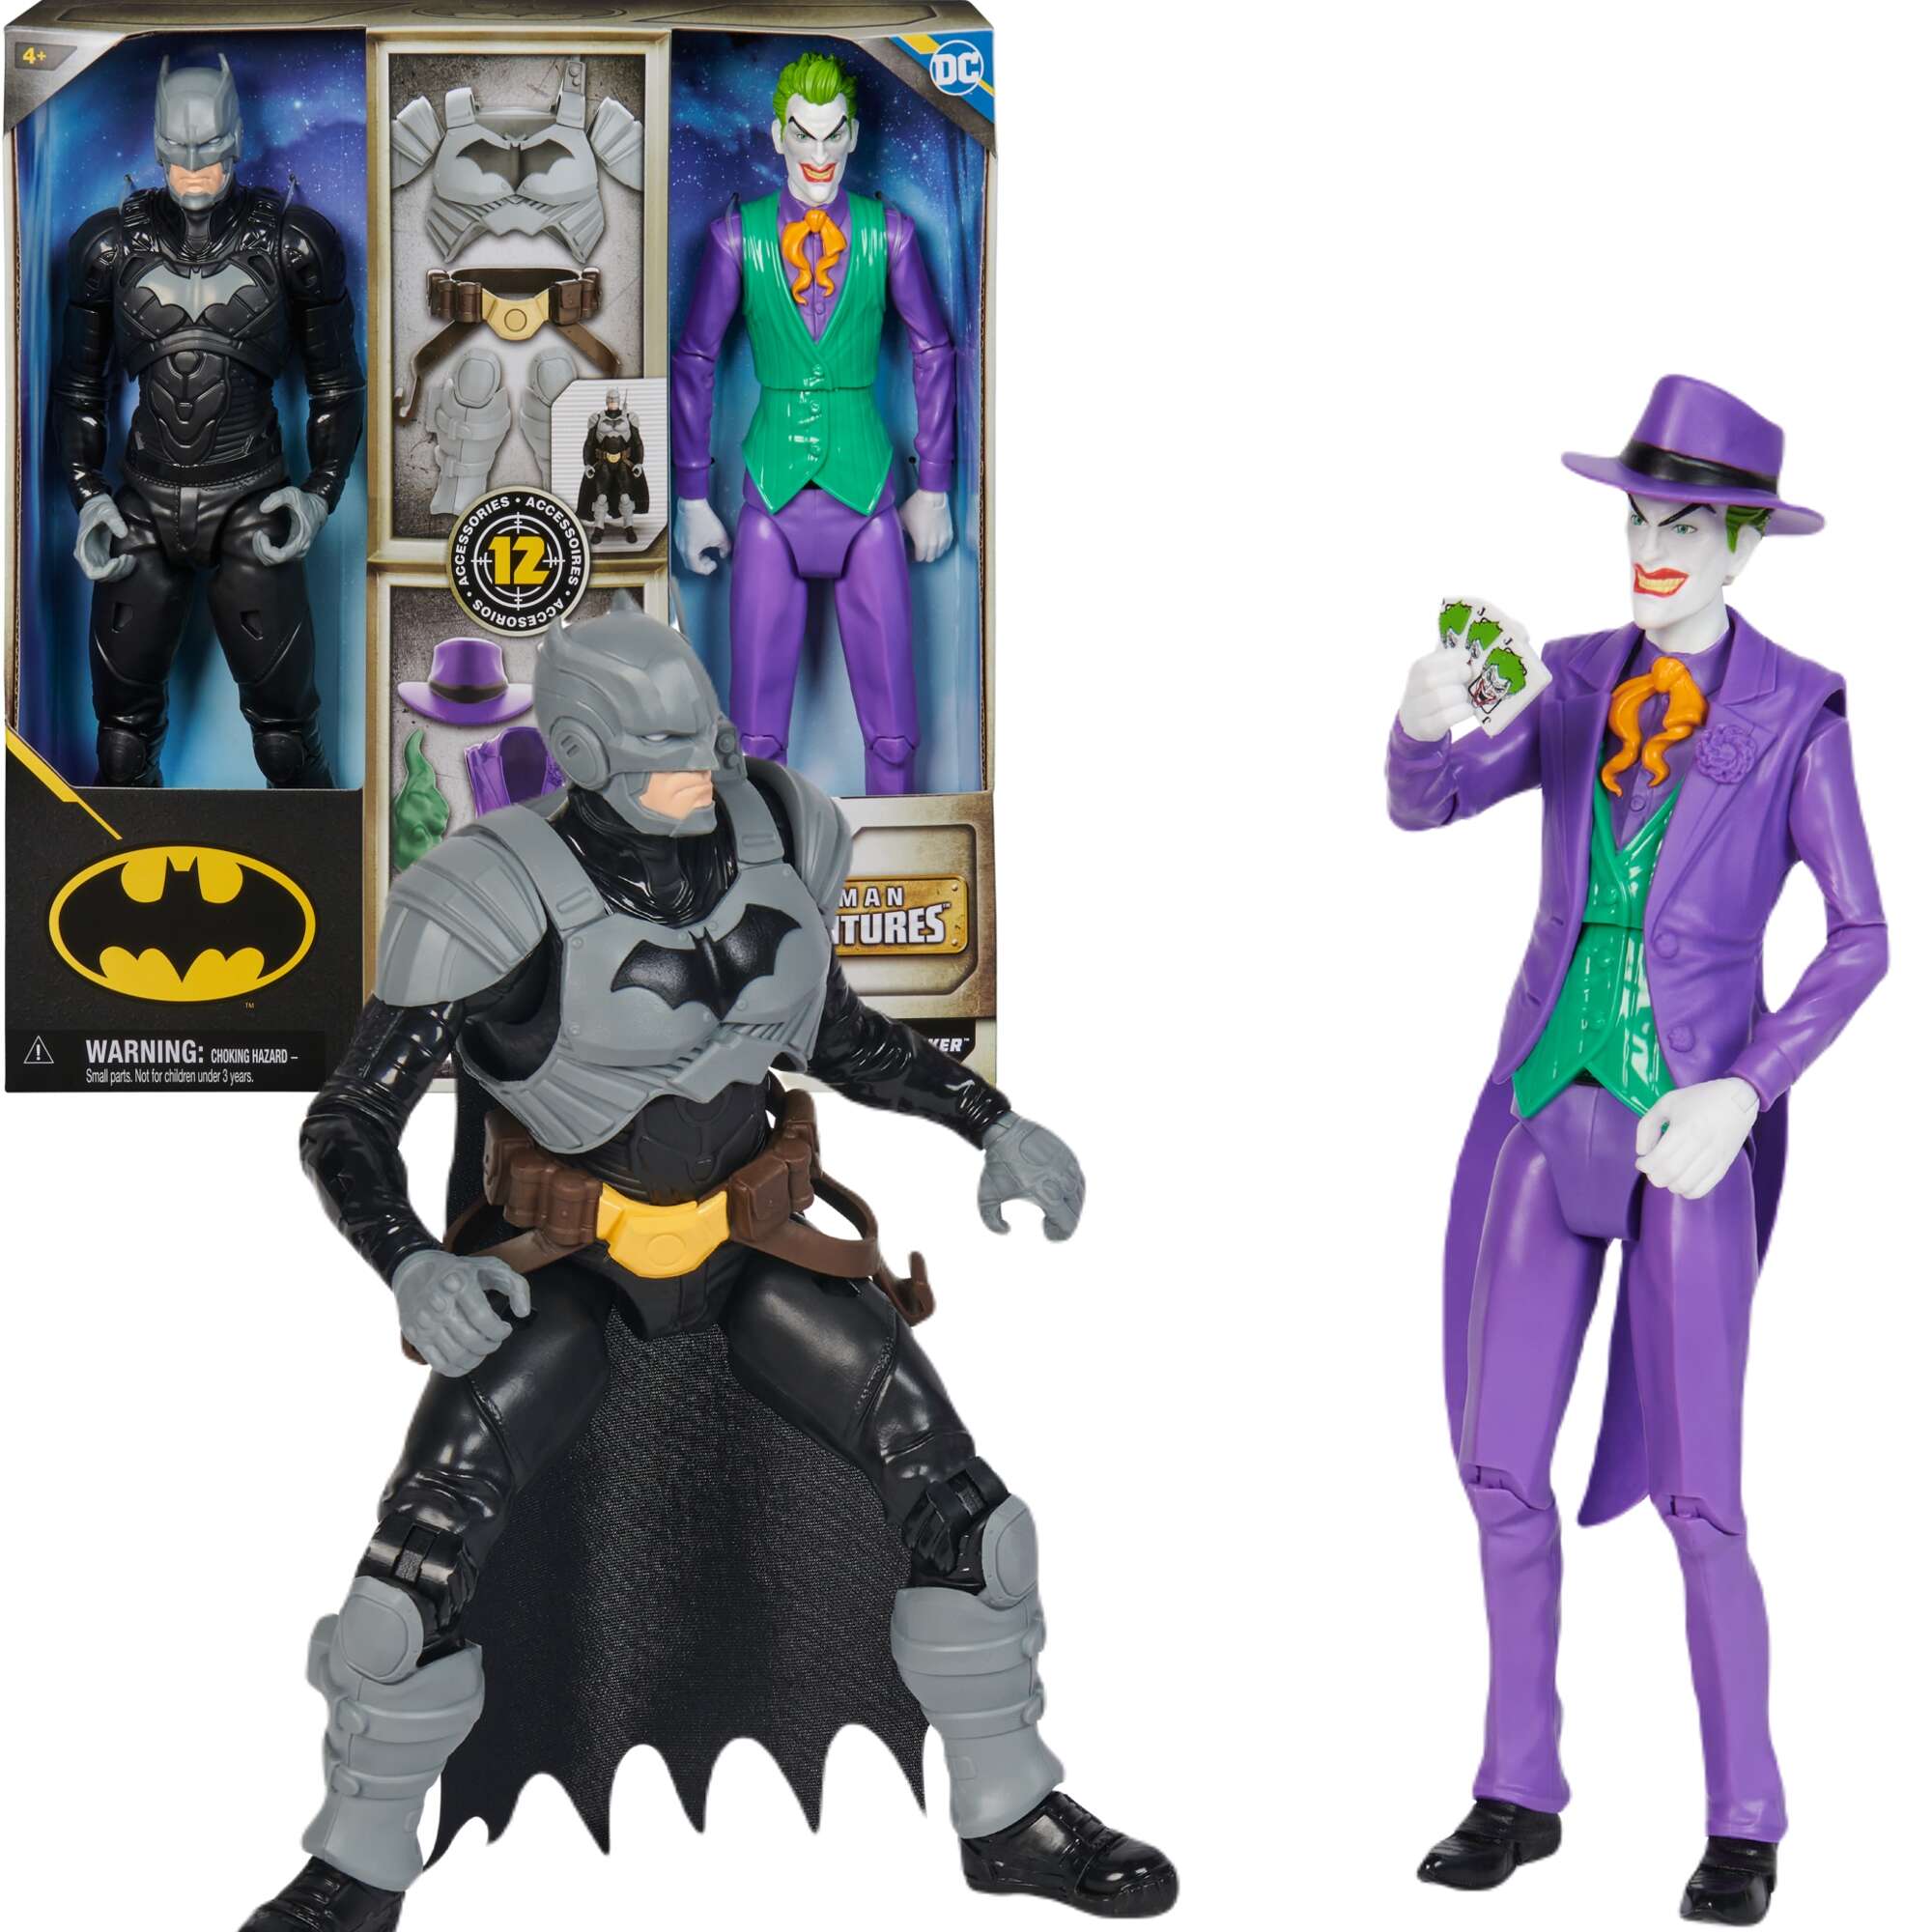 Duy Zestaw 2w1 DC Comics Batman vs Joker figurki 30 cm + akcesoria